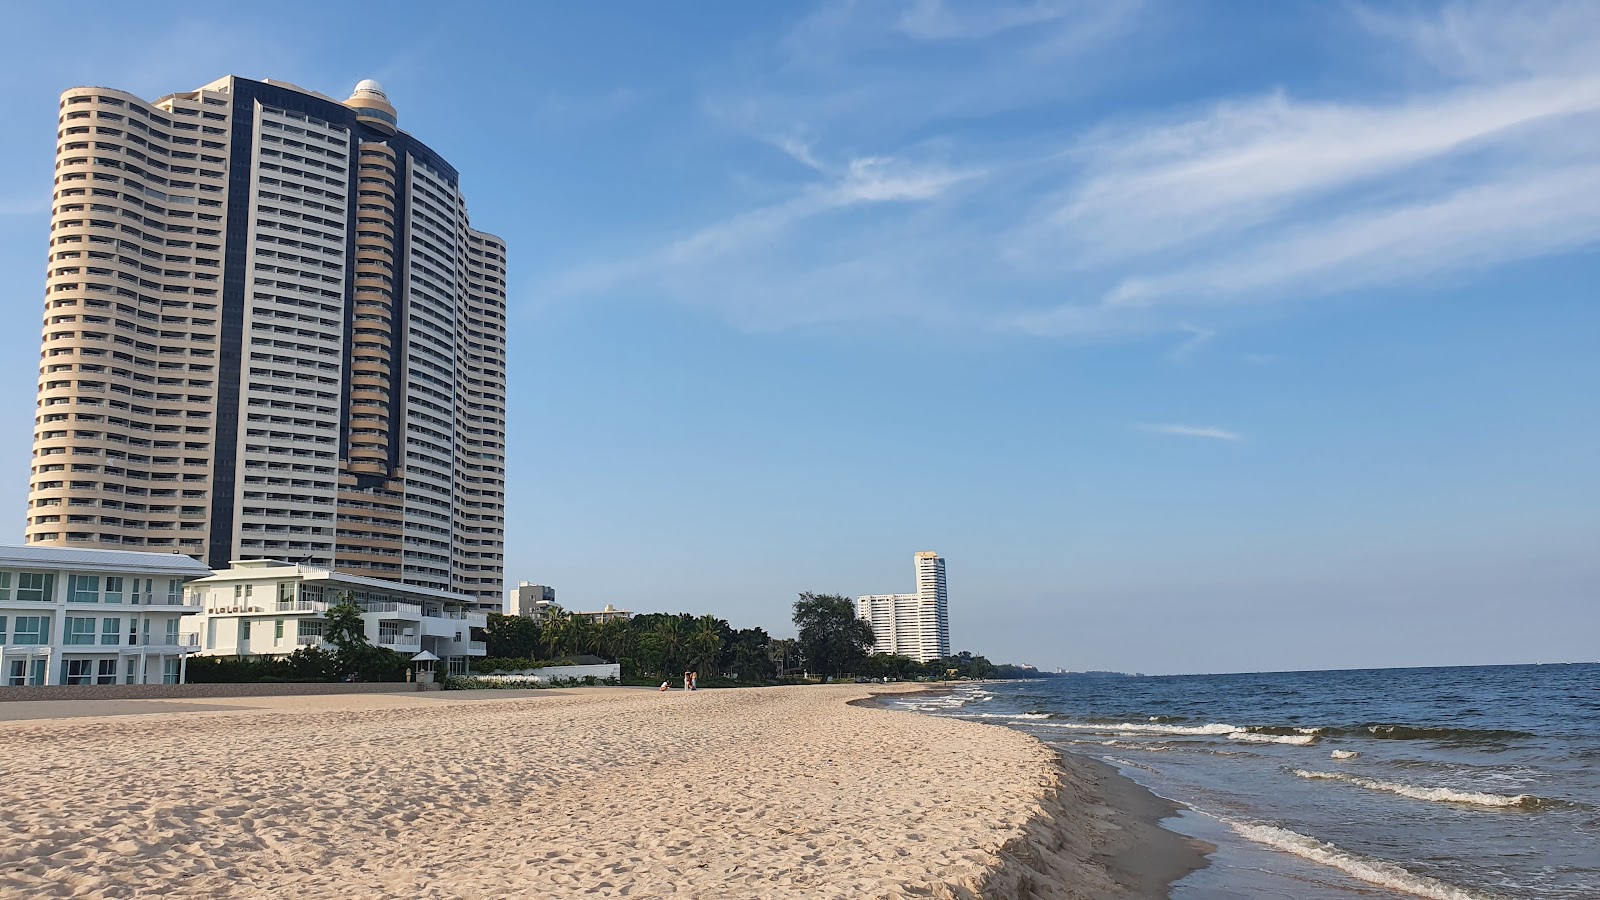 Foto de Springfield Beach - lugar popular entre os apreciadores de relaxamento